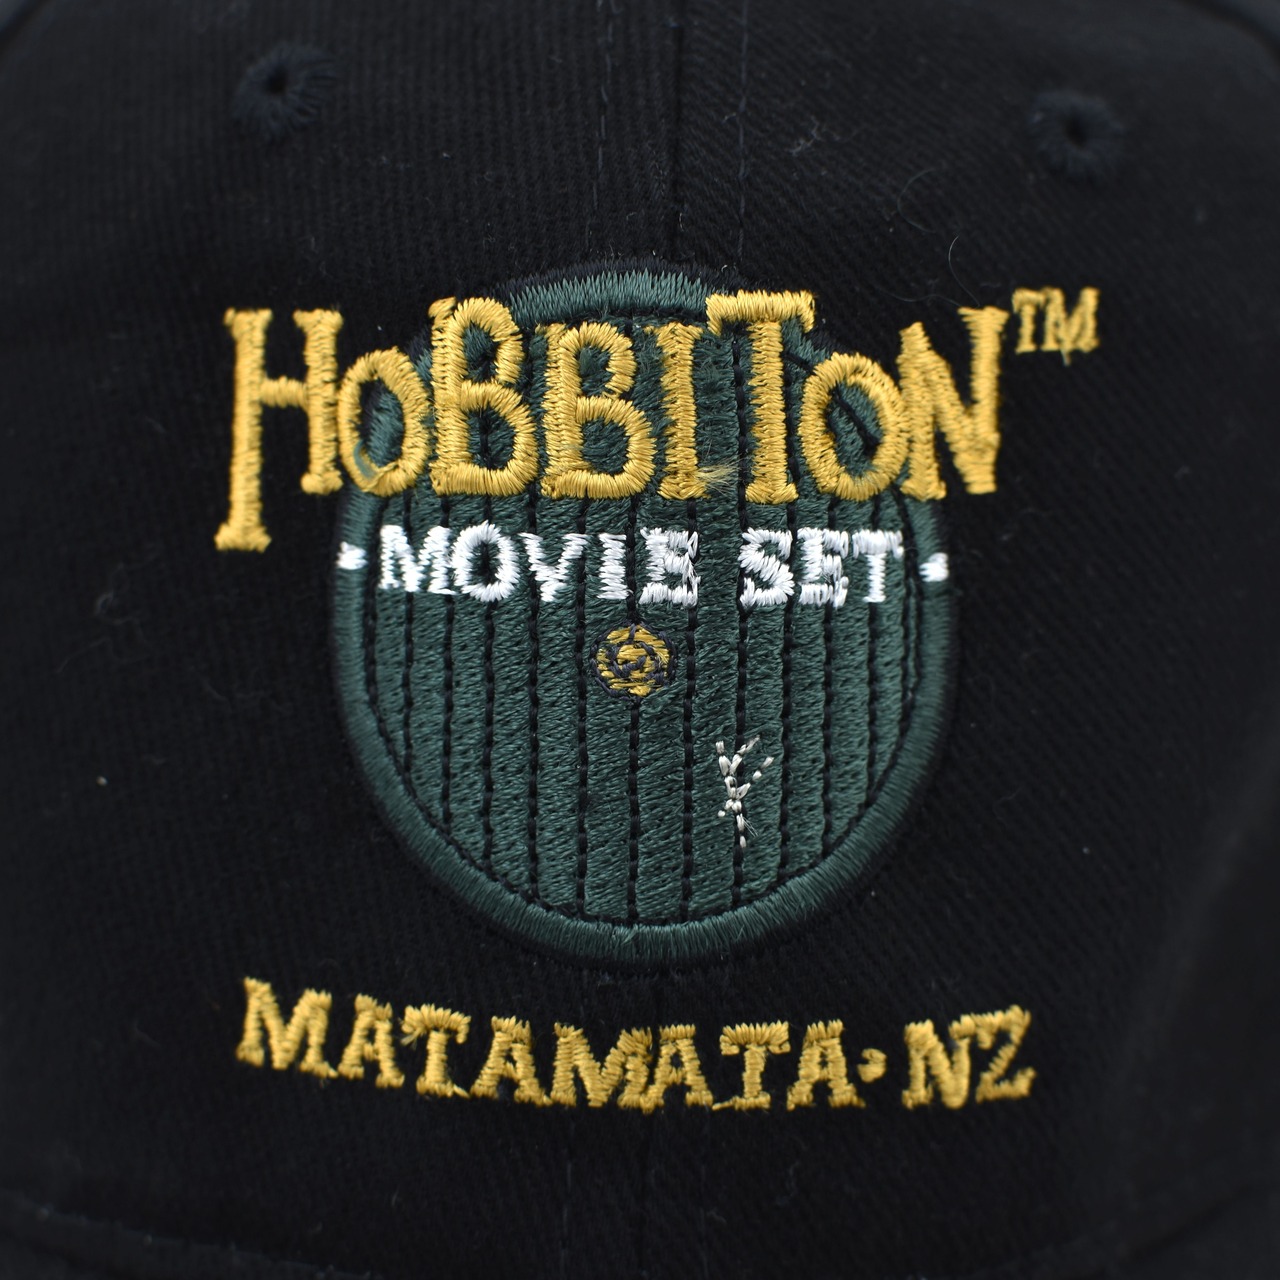 LOTR HOBBITON movie set 6panel cap